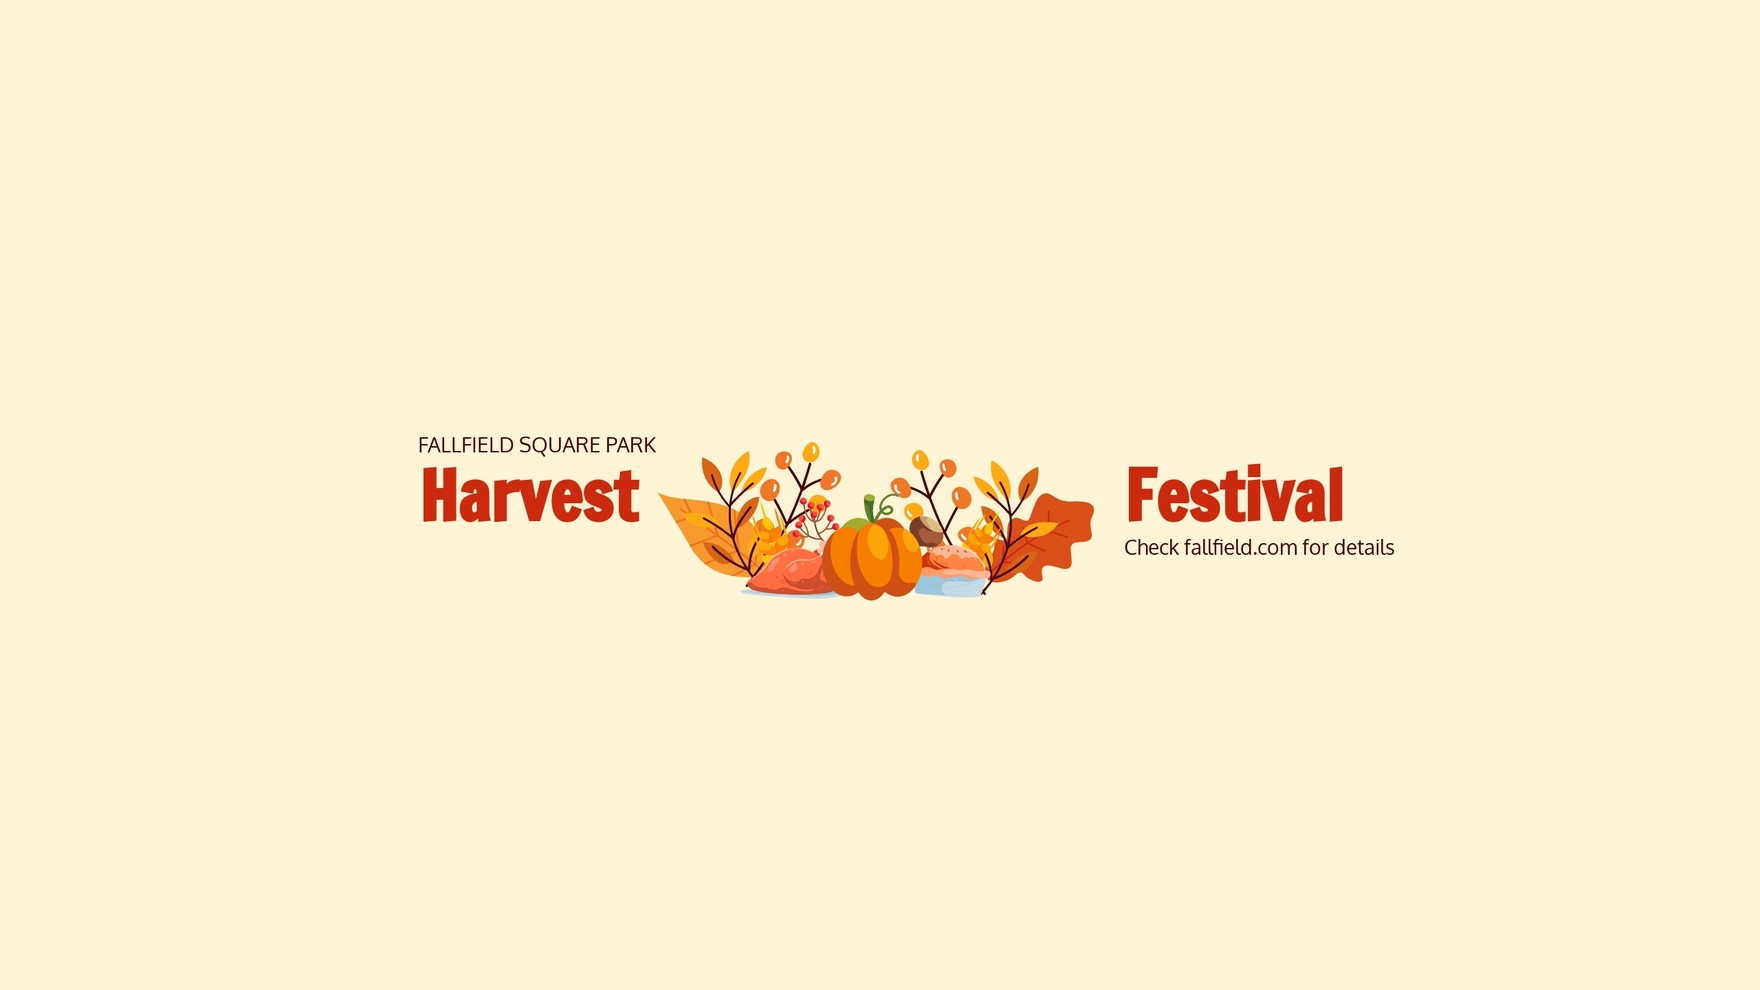 Fall Harvest Youtube Banner Template